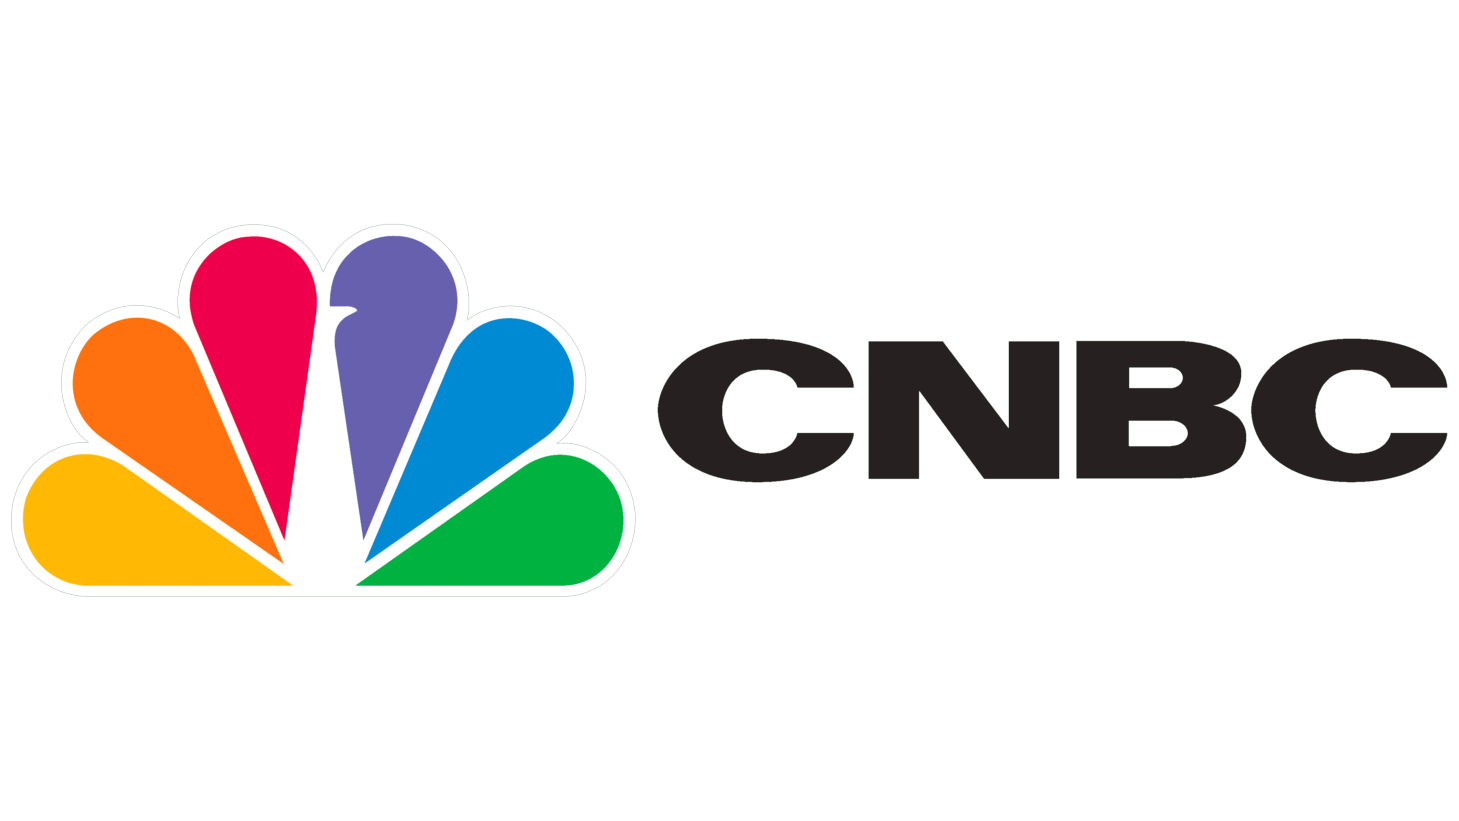 Cnbc logo